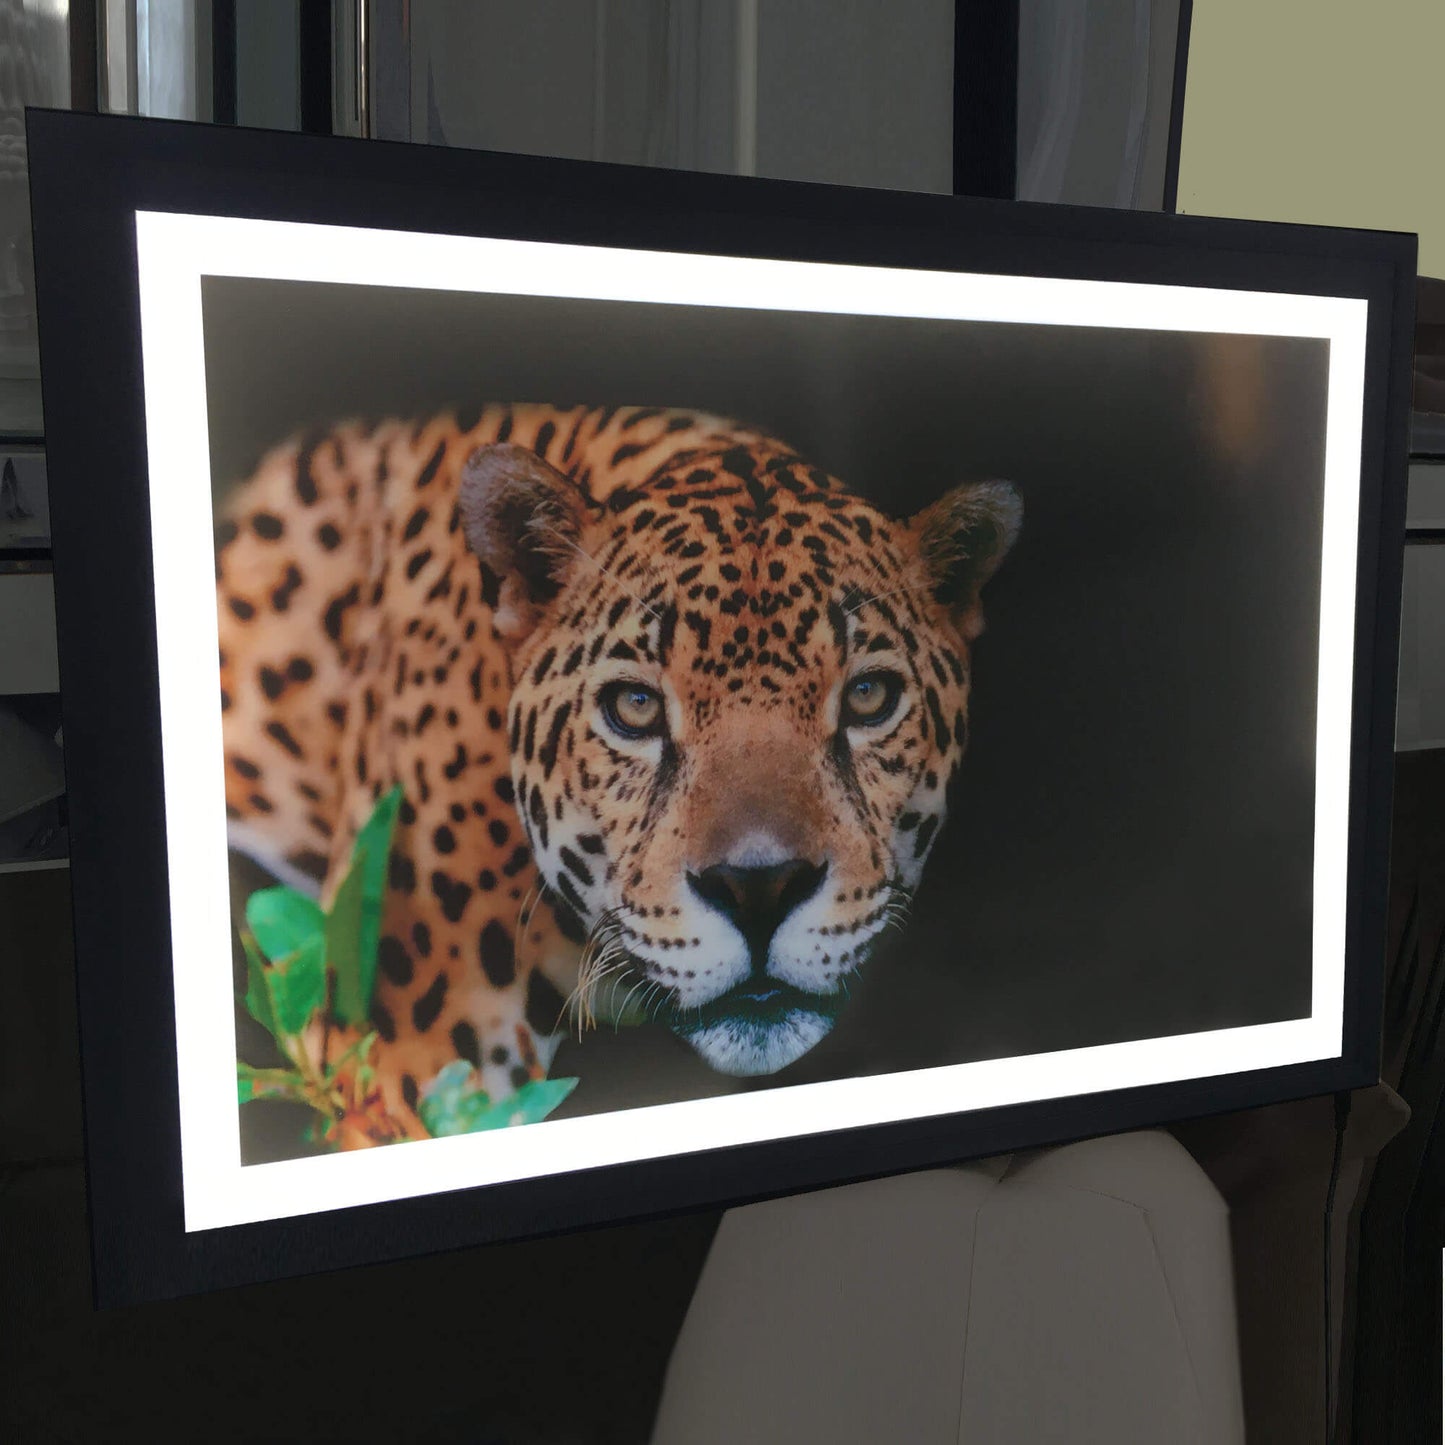 LED-Hintergrundbeleuchtung mit Leoparden-Rahmen (C)